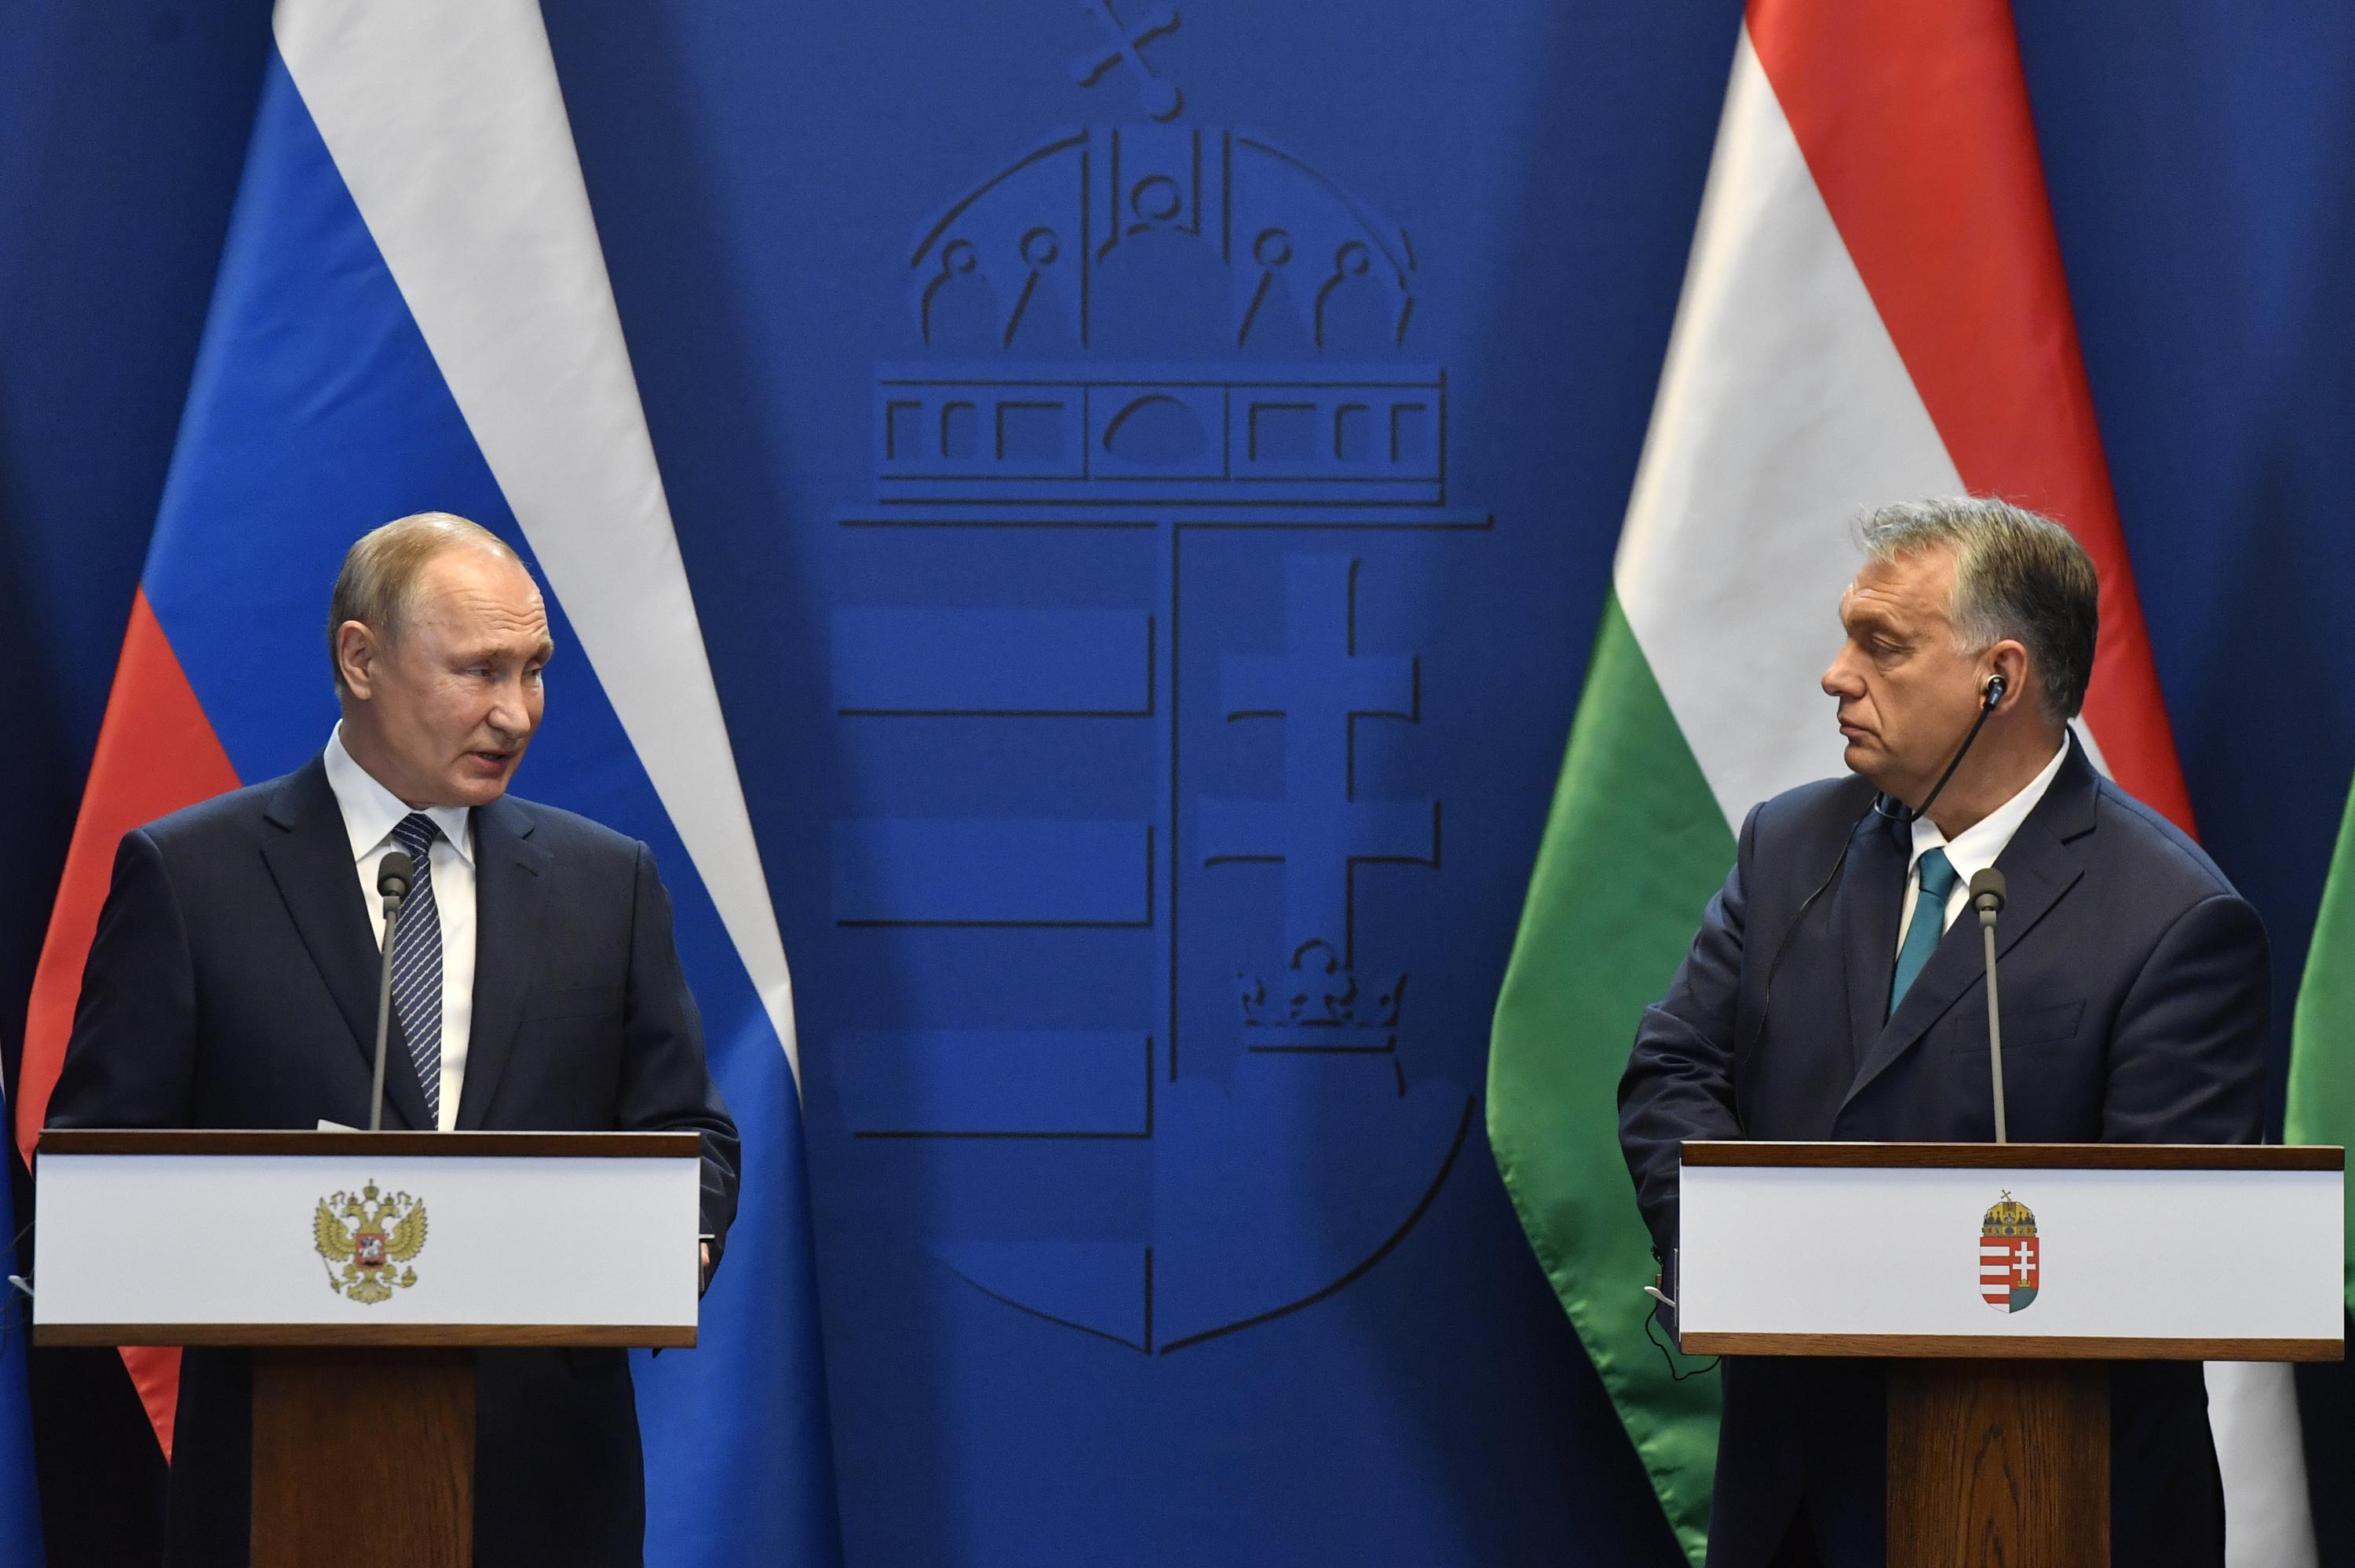 Hungary's Orban criticized for 'neutrality' in Ukraine war